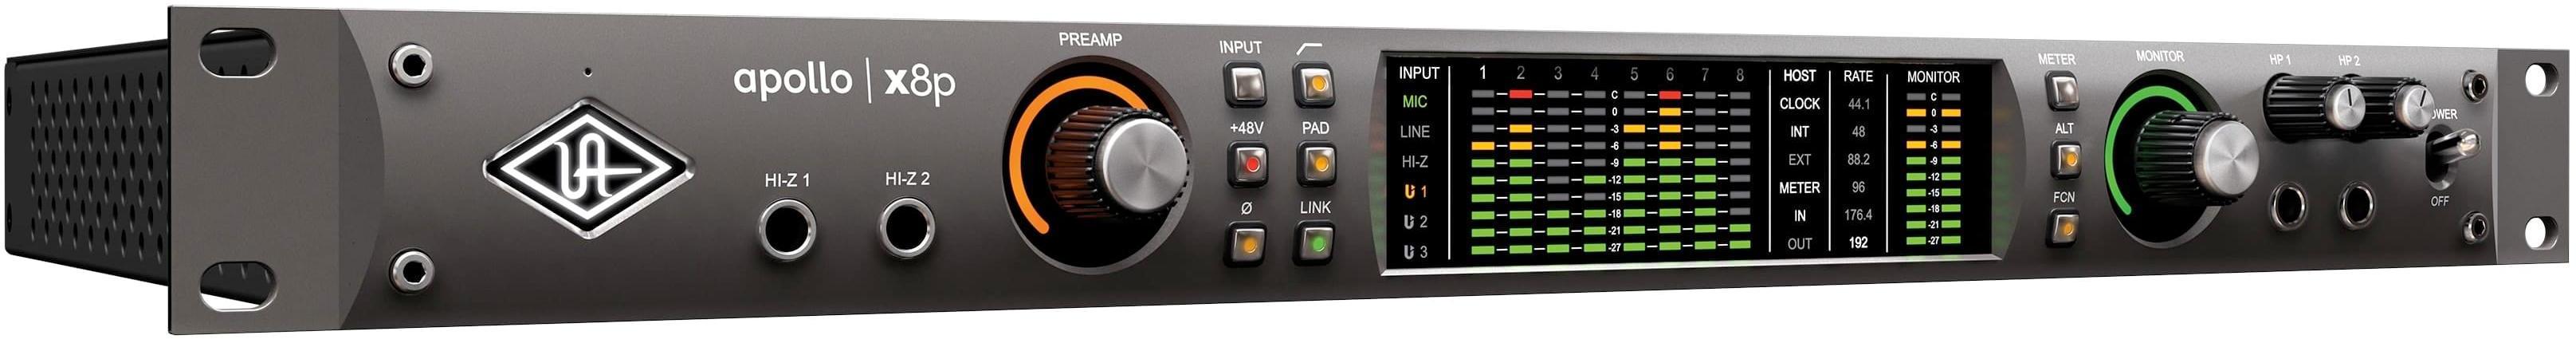 Thunderbolt audio-interface Universal audio Apollo x8p